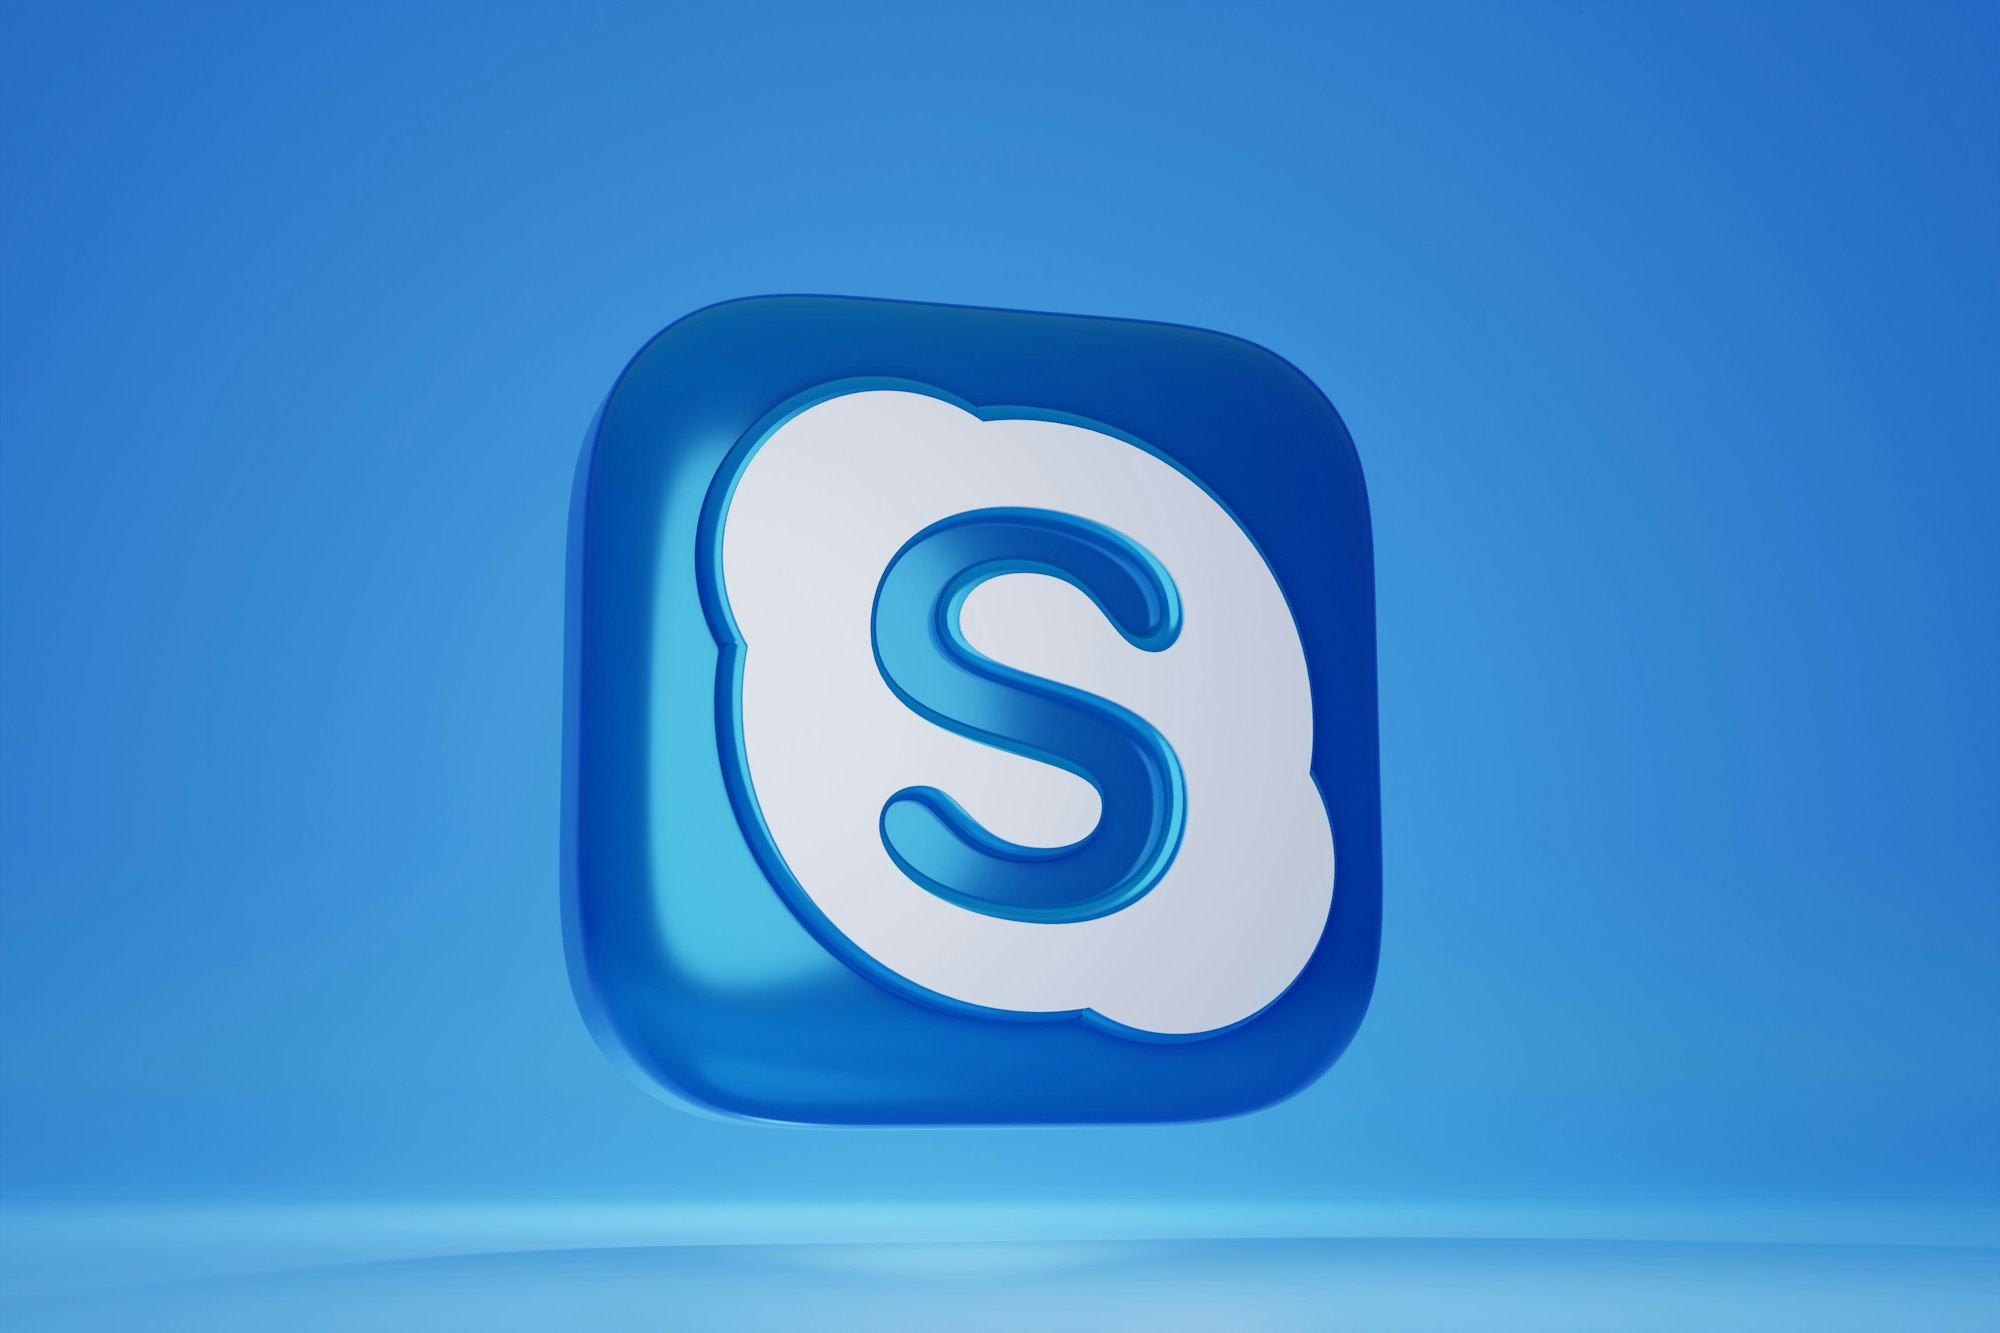 A 3D render of the Skype logo